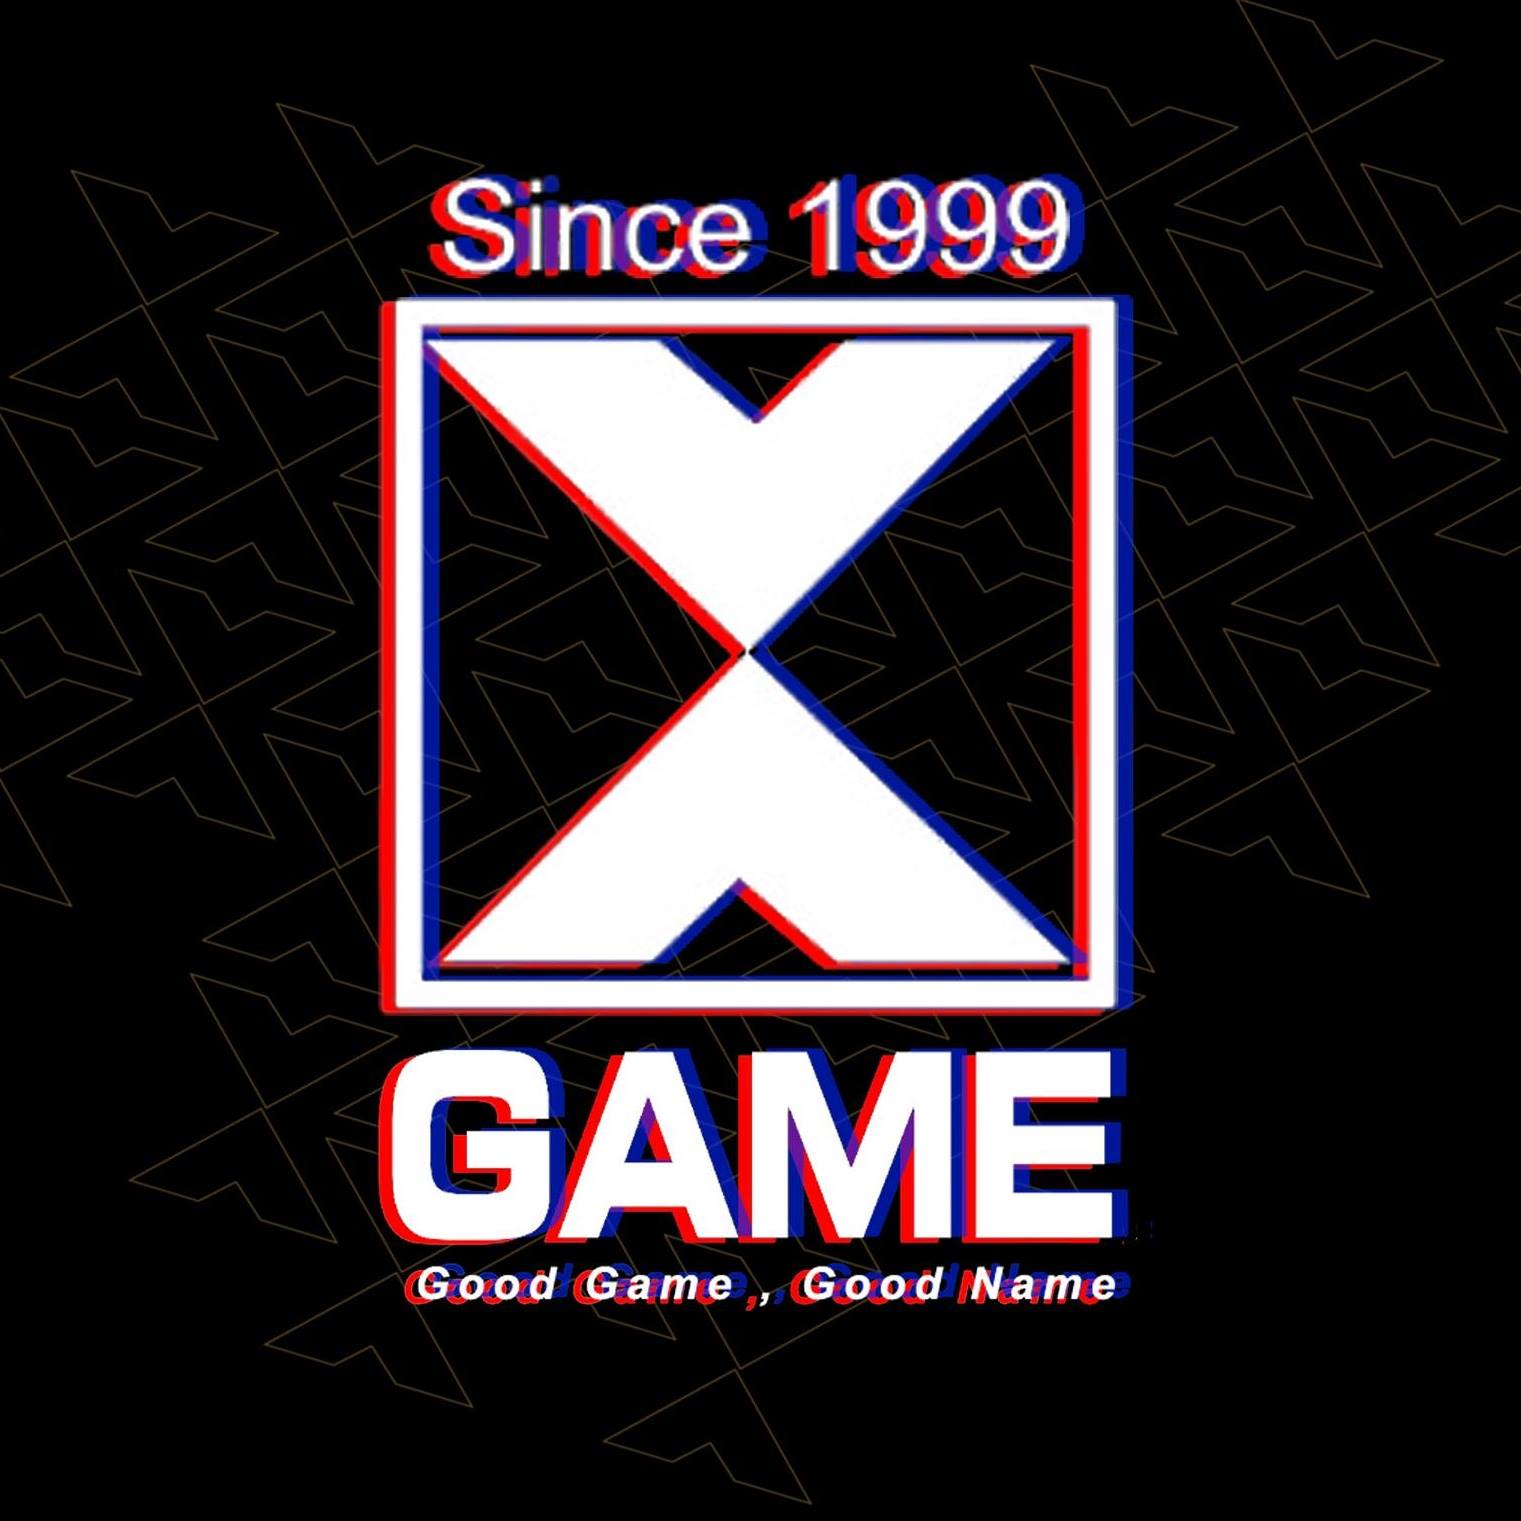 إكس جيم ستورز XGame Stores